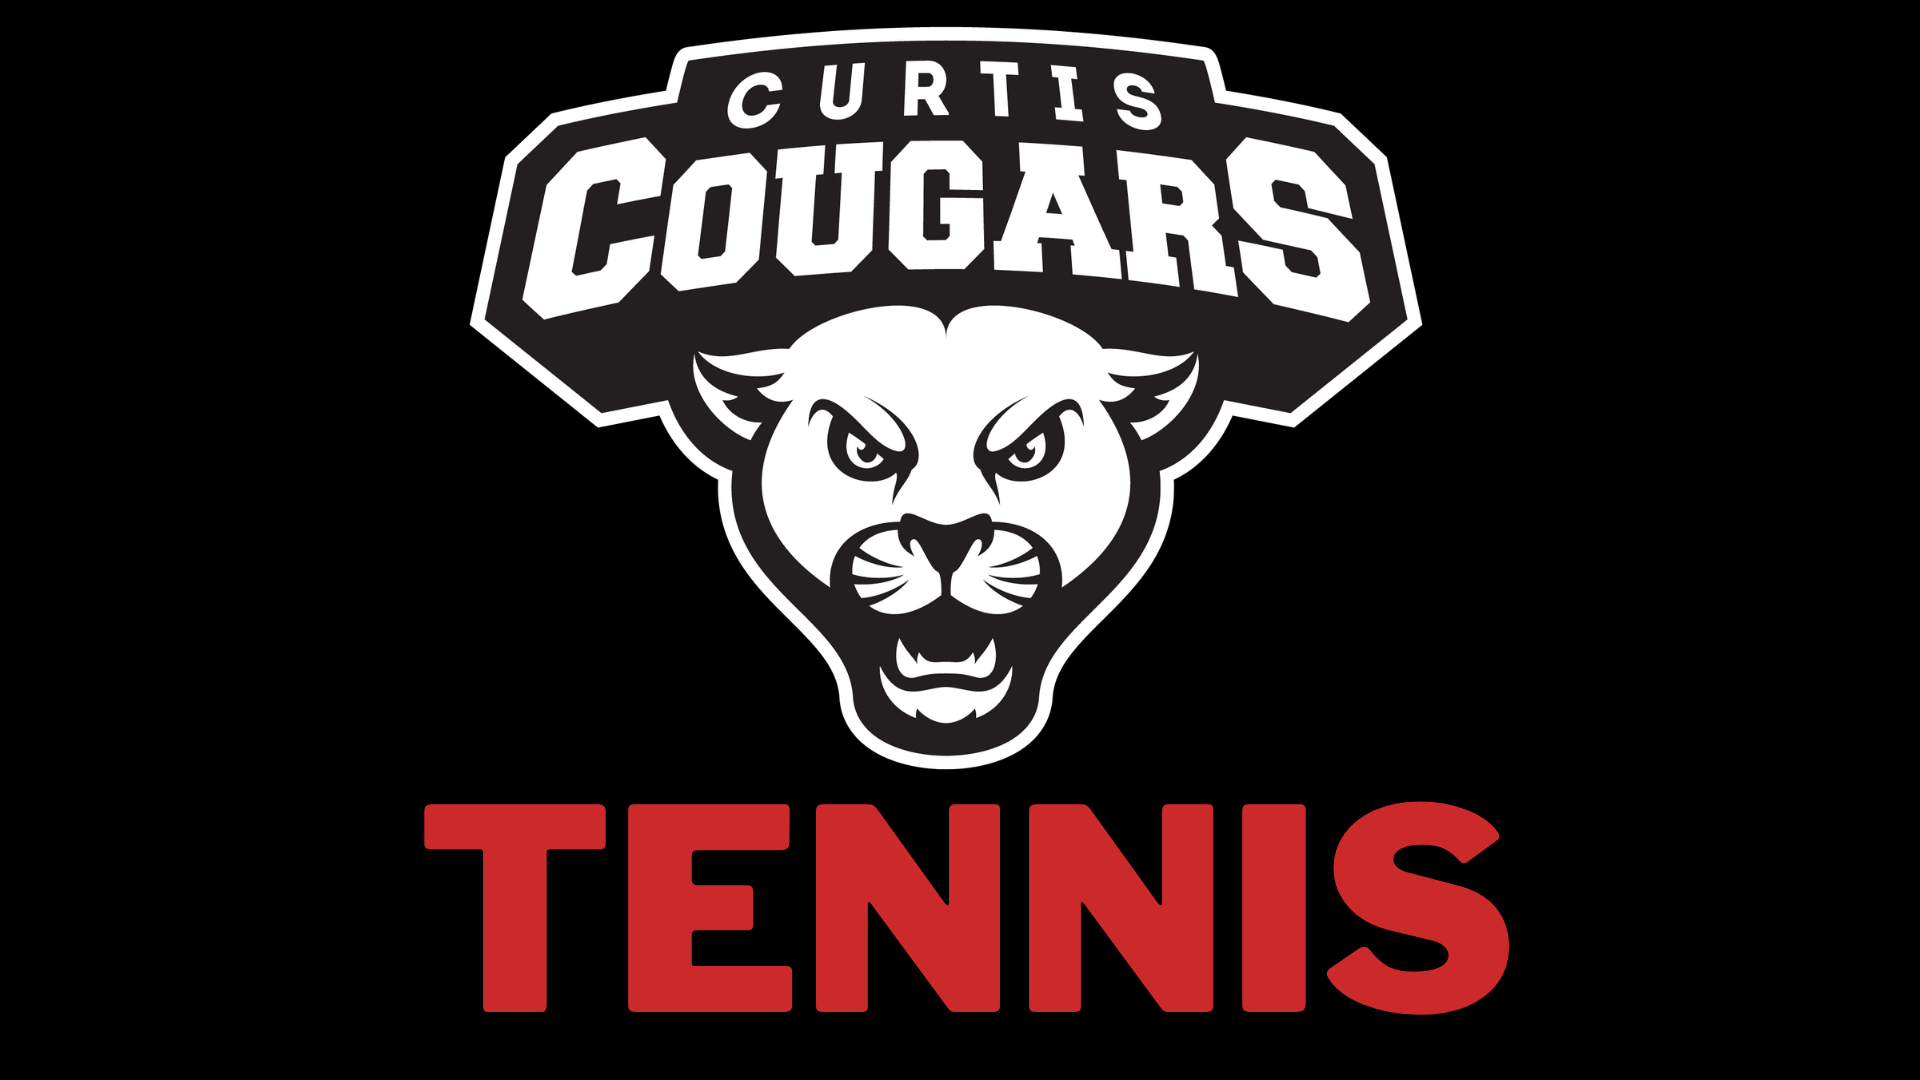 Curtis Cougars Tennis